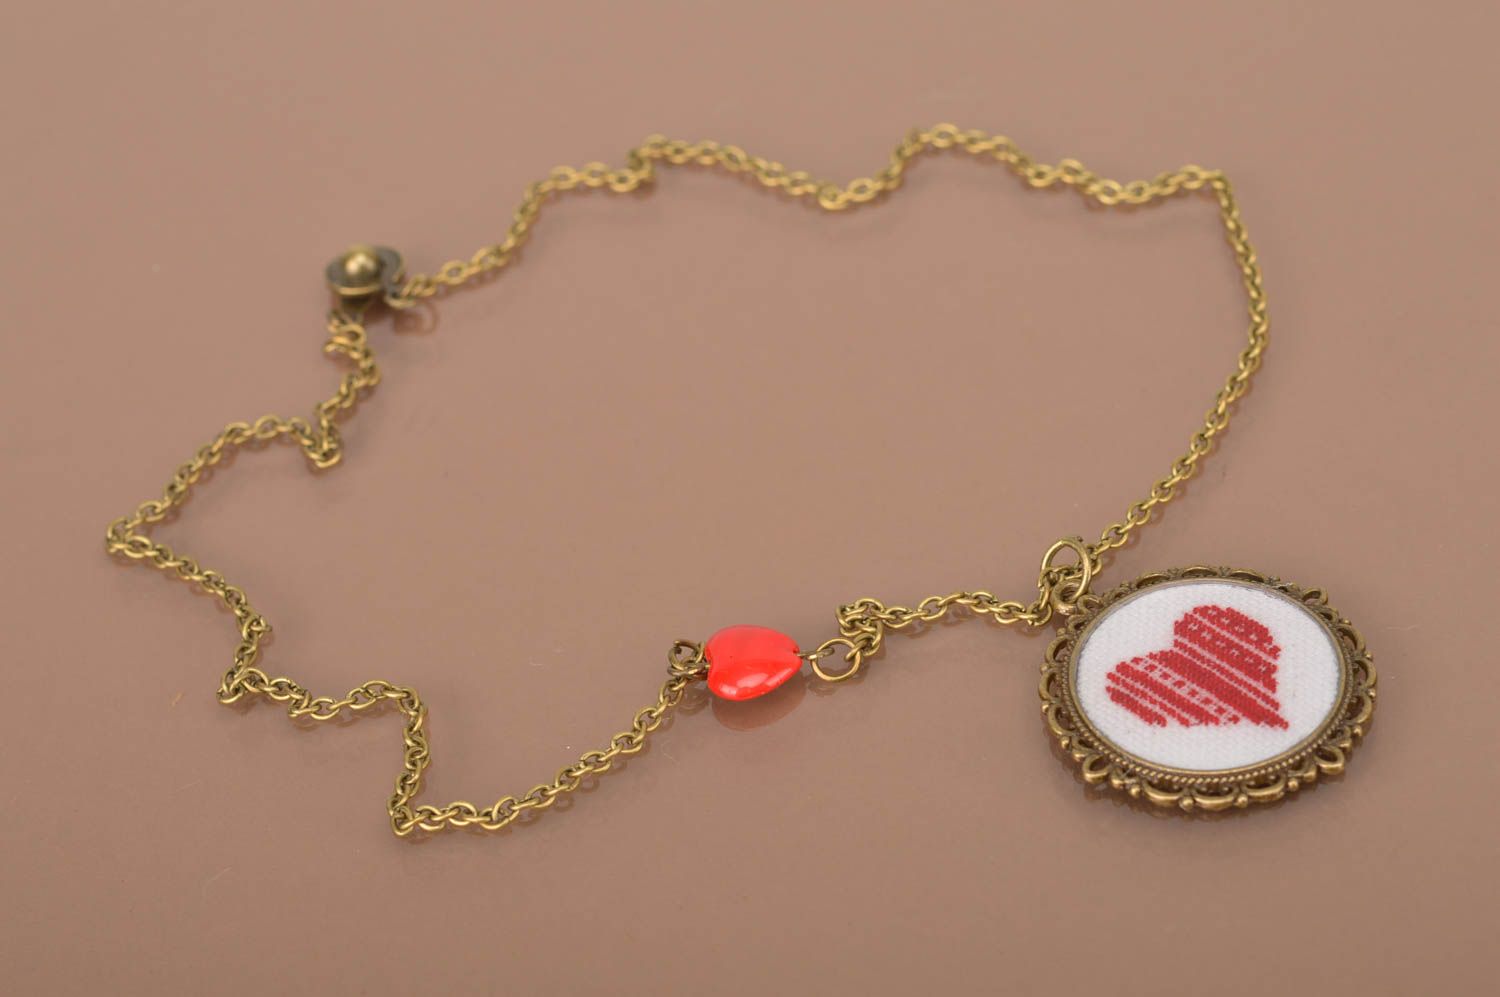 Handmade jewellery pendant necklace chain necklace fashion accessories gift idea photo 2